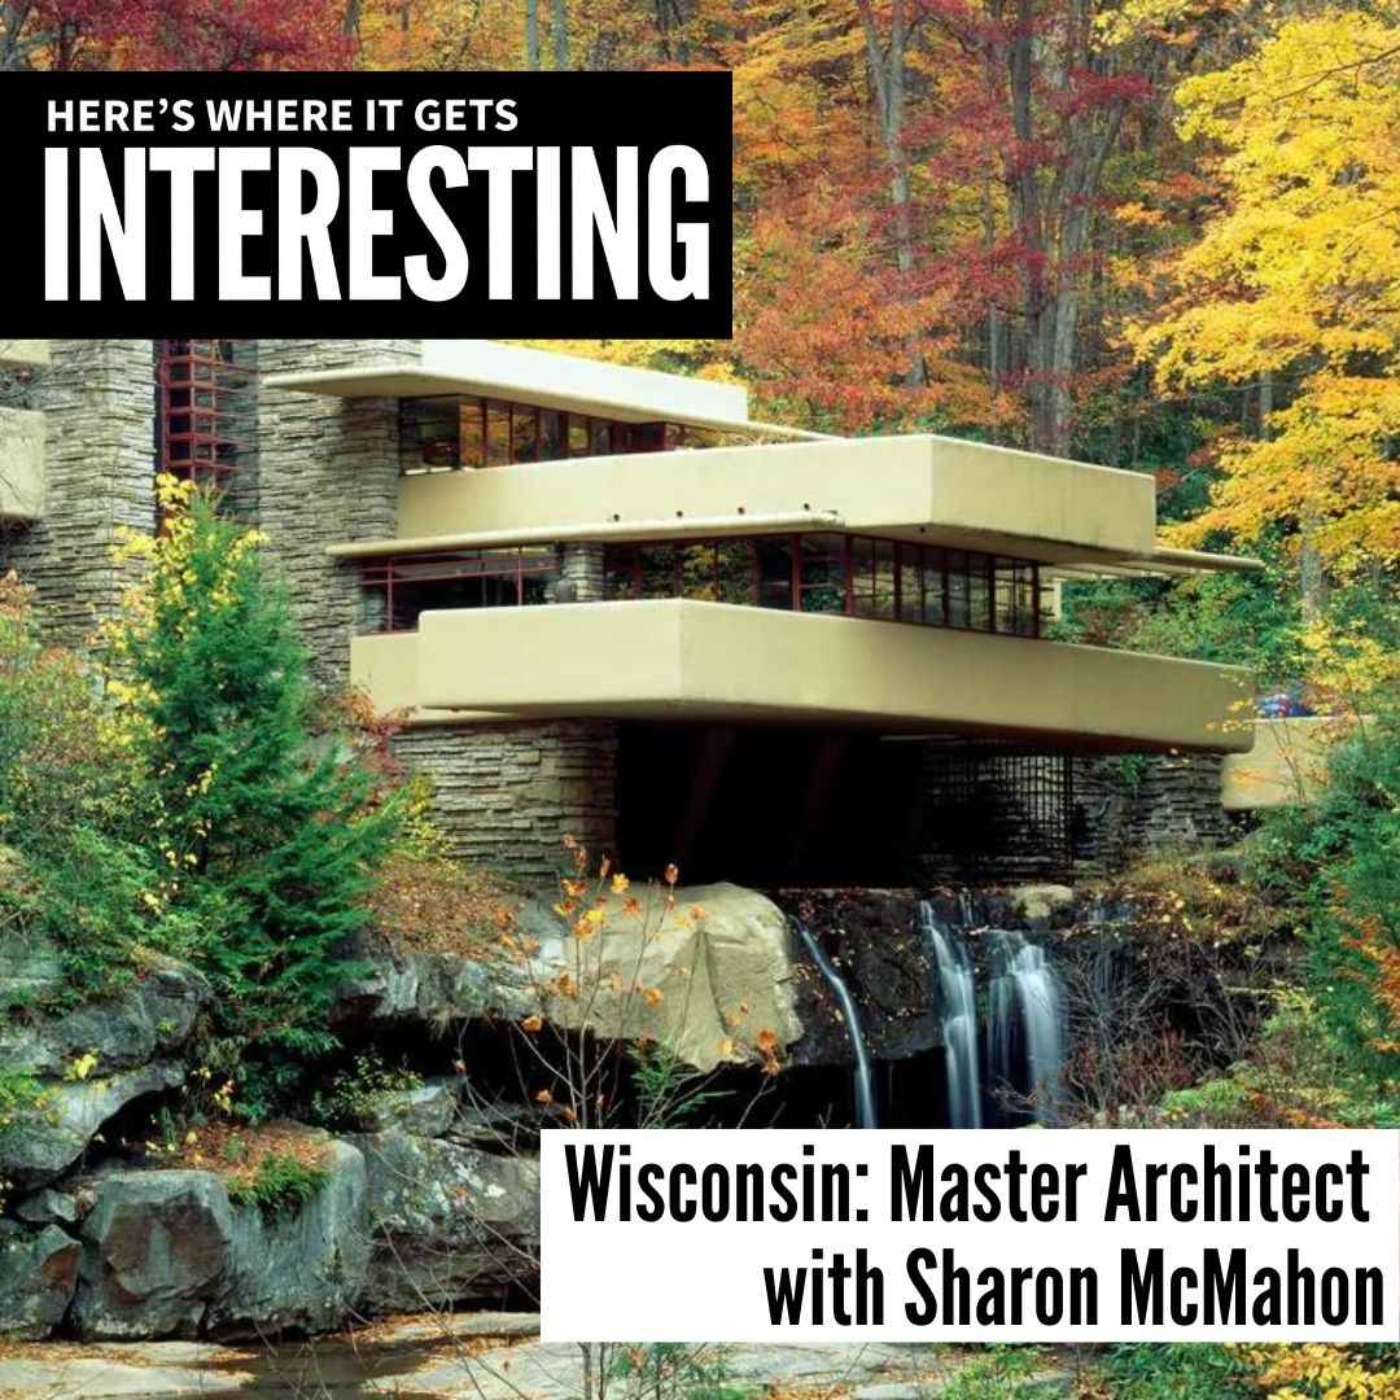 Wisconsin’s Master Architect with Sharon McMahon